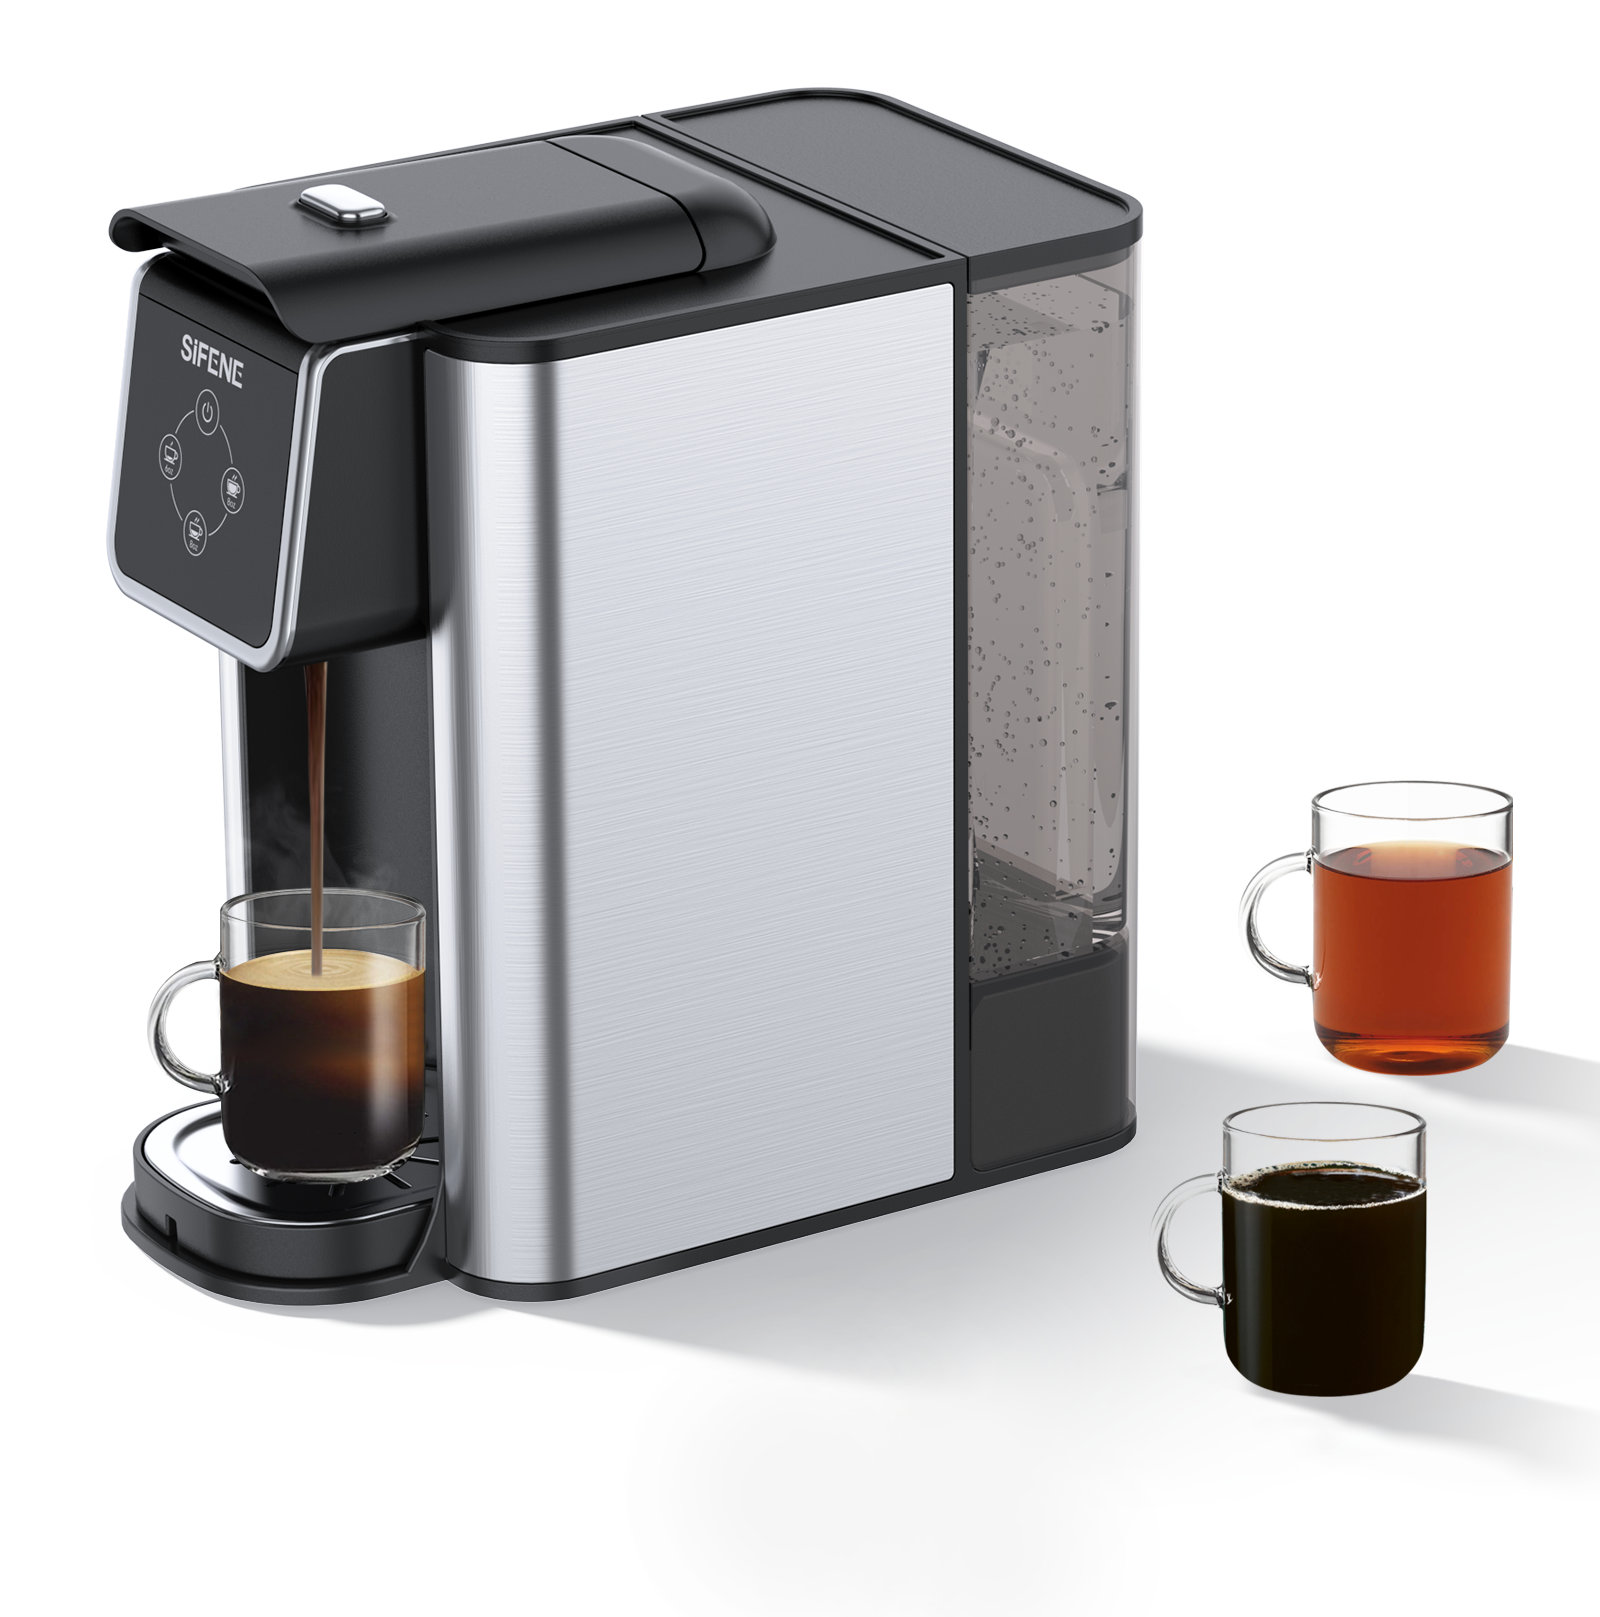 Versatile 3-in-1 Sifene Coffee Machine - K-Cup, Ground Coffee & Tea Brewer  with 50oz Reservoir